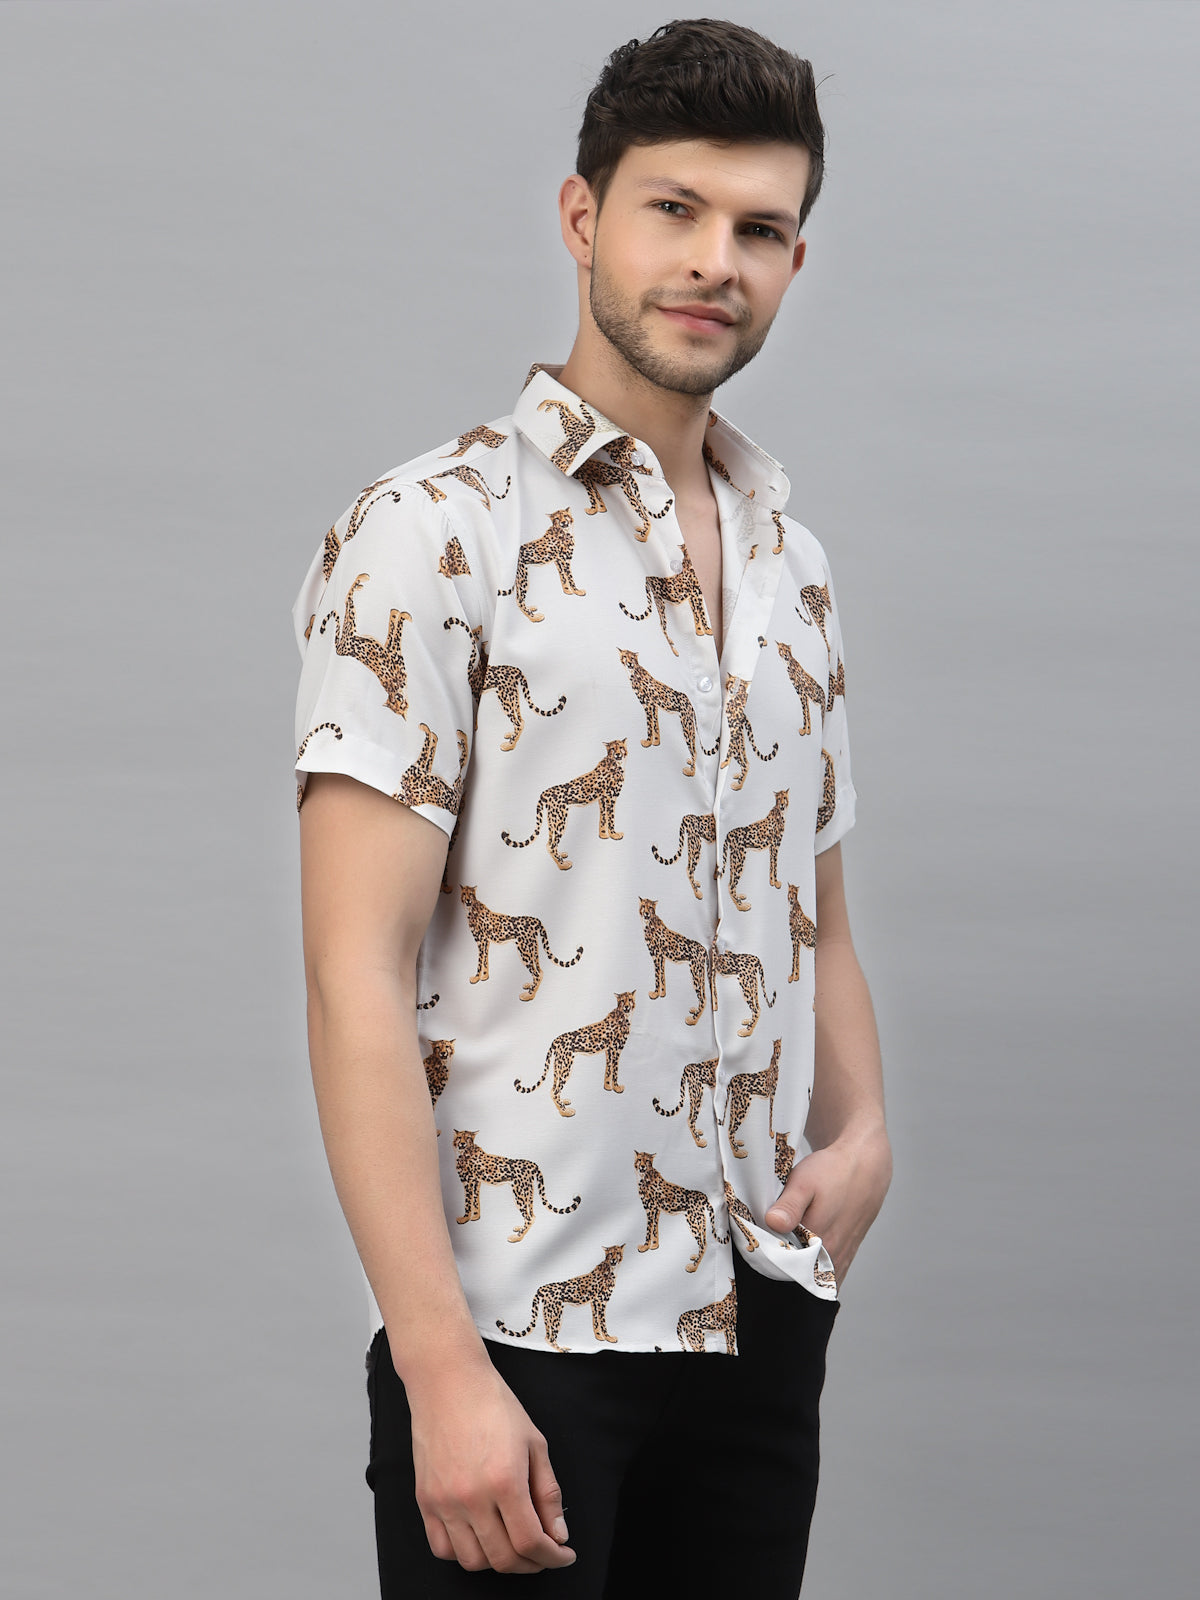 Leopard Animal Print Half Sleeve Shirt By Gavin Paris